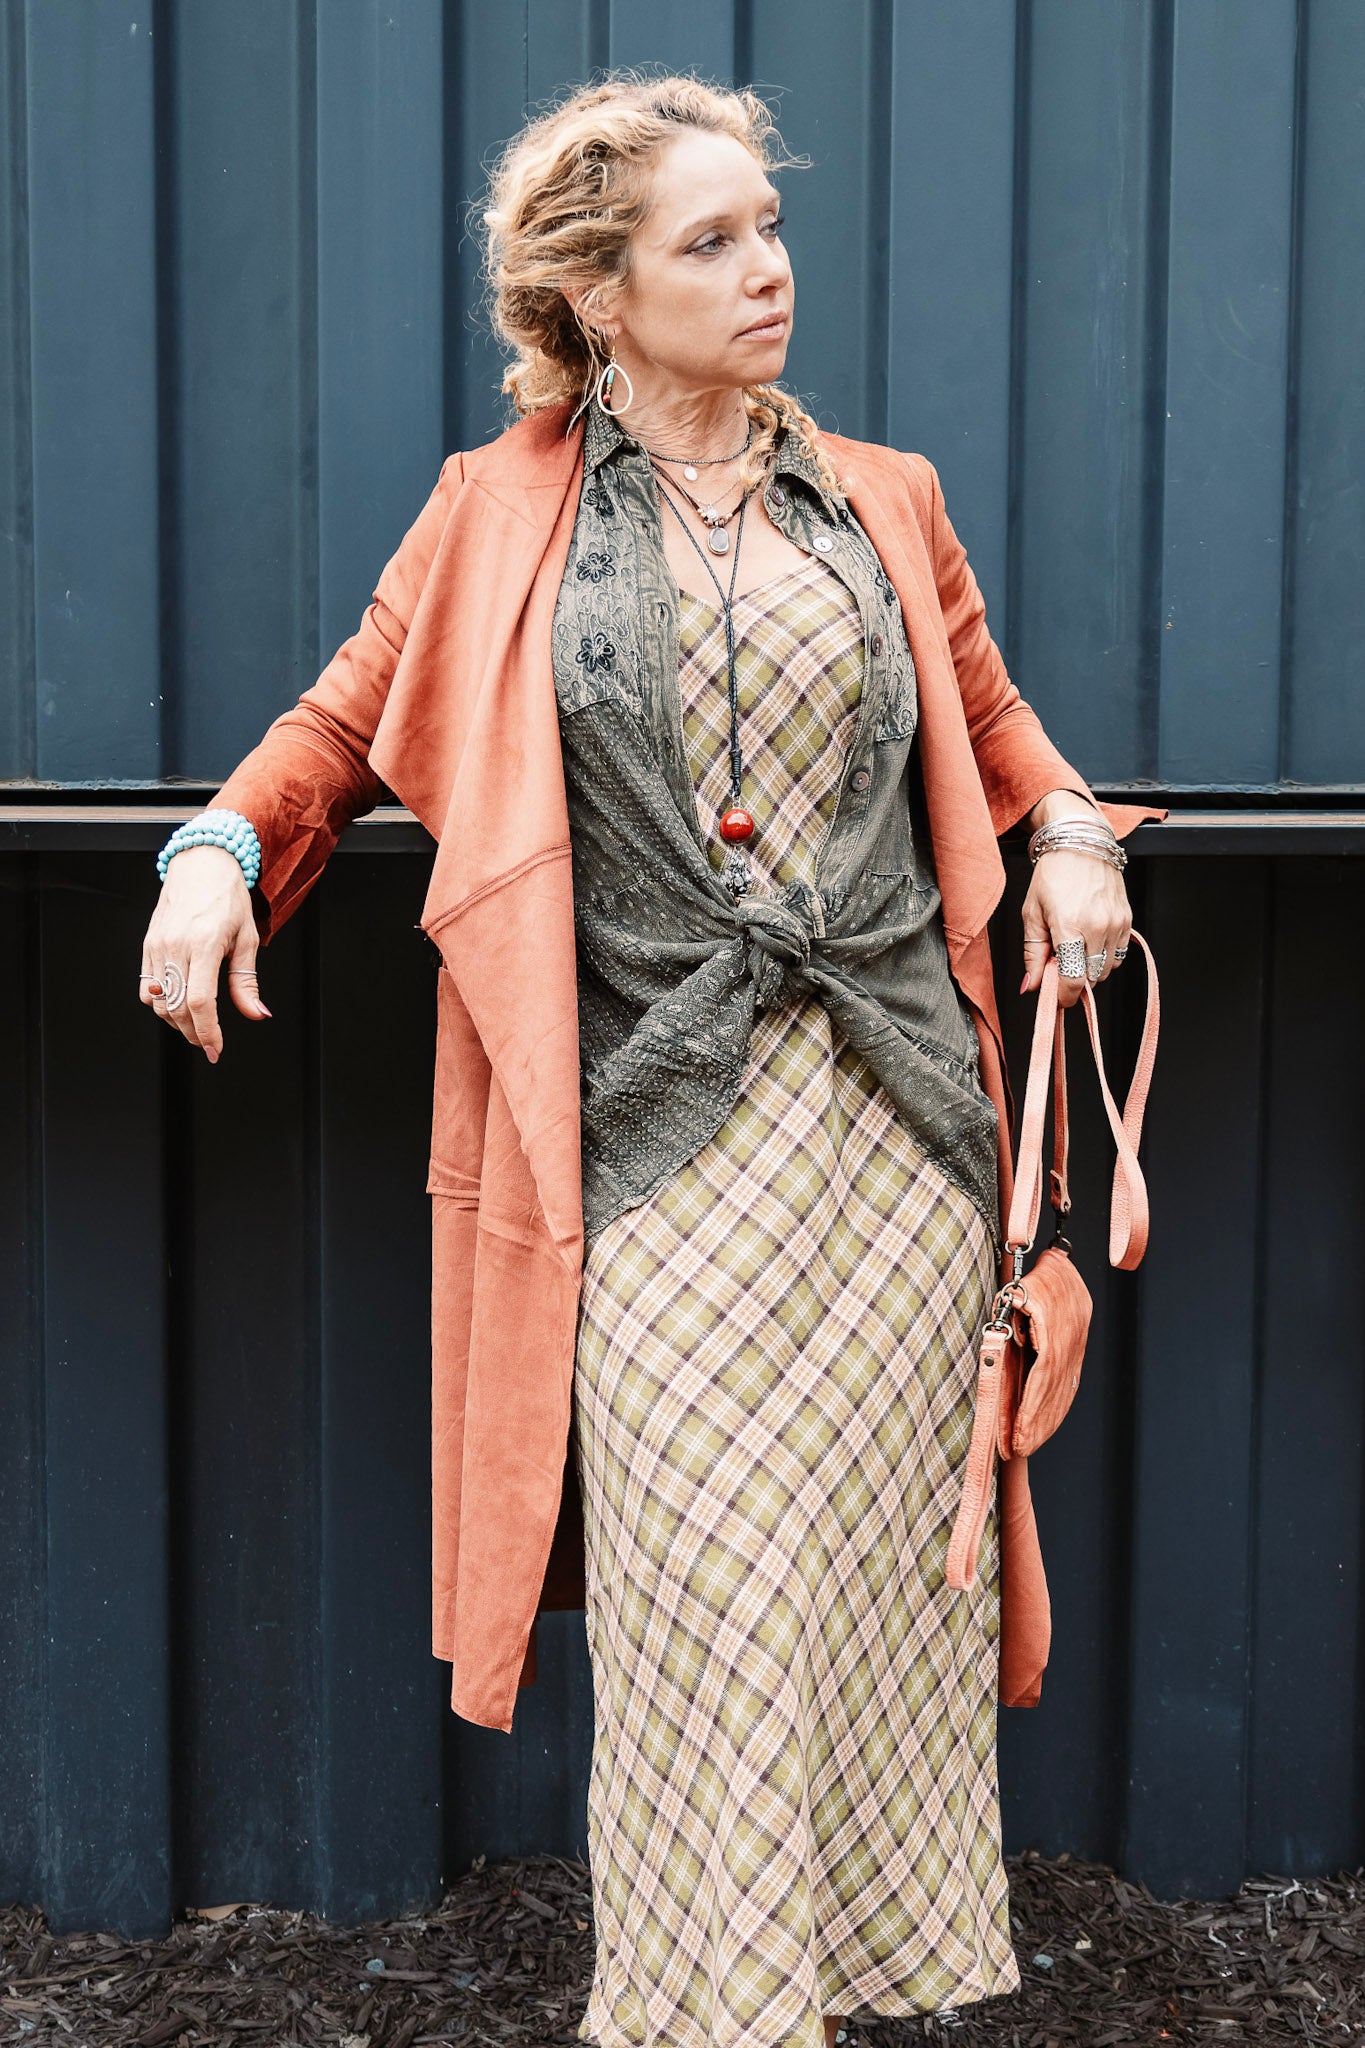 The Hannah Suede Long Coat in Copper - SpiritedBoutiques Boho Hippie Boutique Style Coat, BIZ